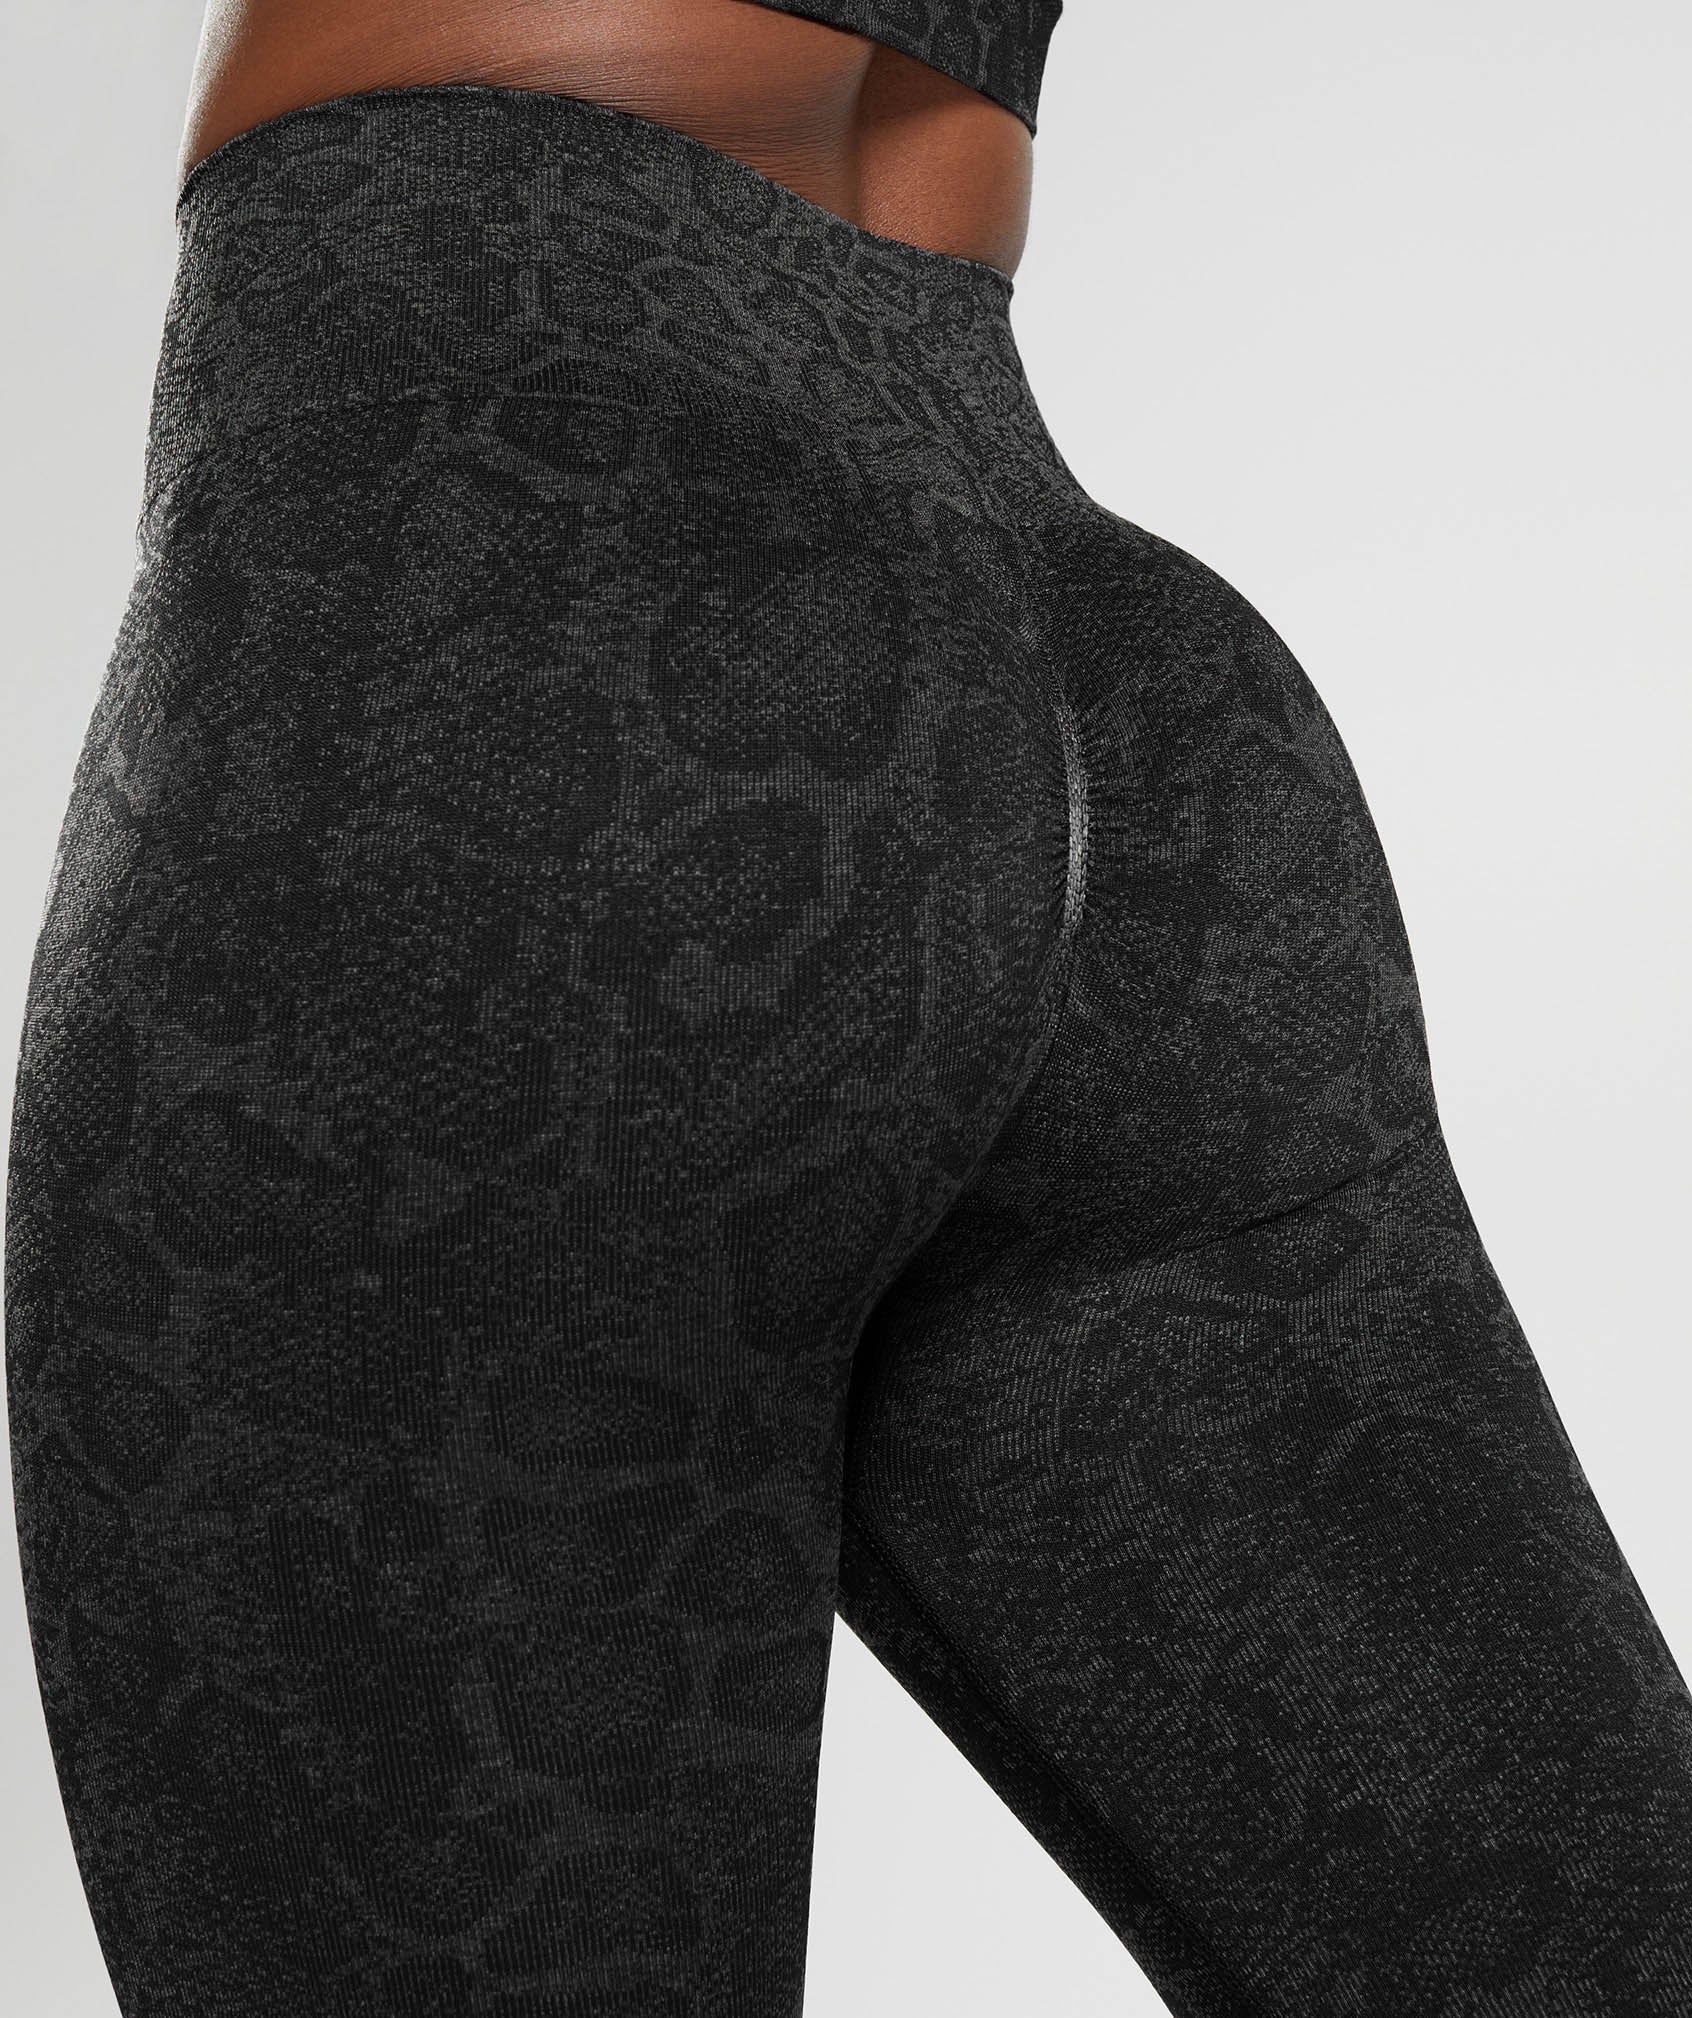 Gymshark Adapt Pattern Seamless Leggings - Black/Graphite Grey